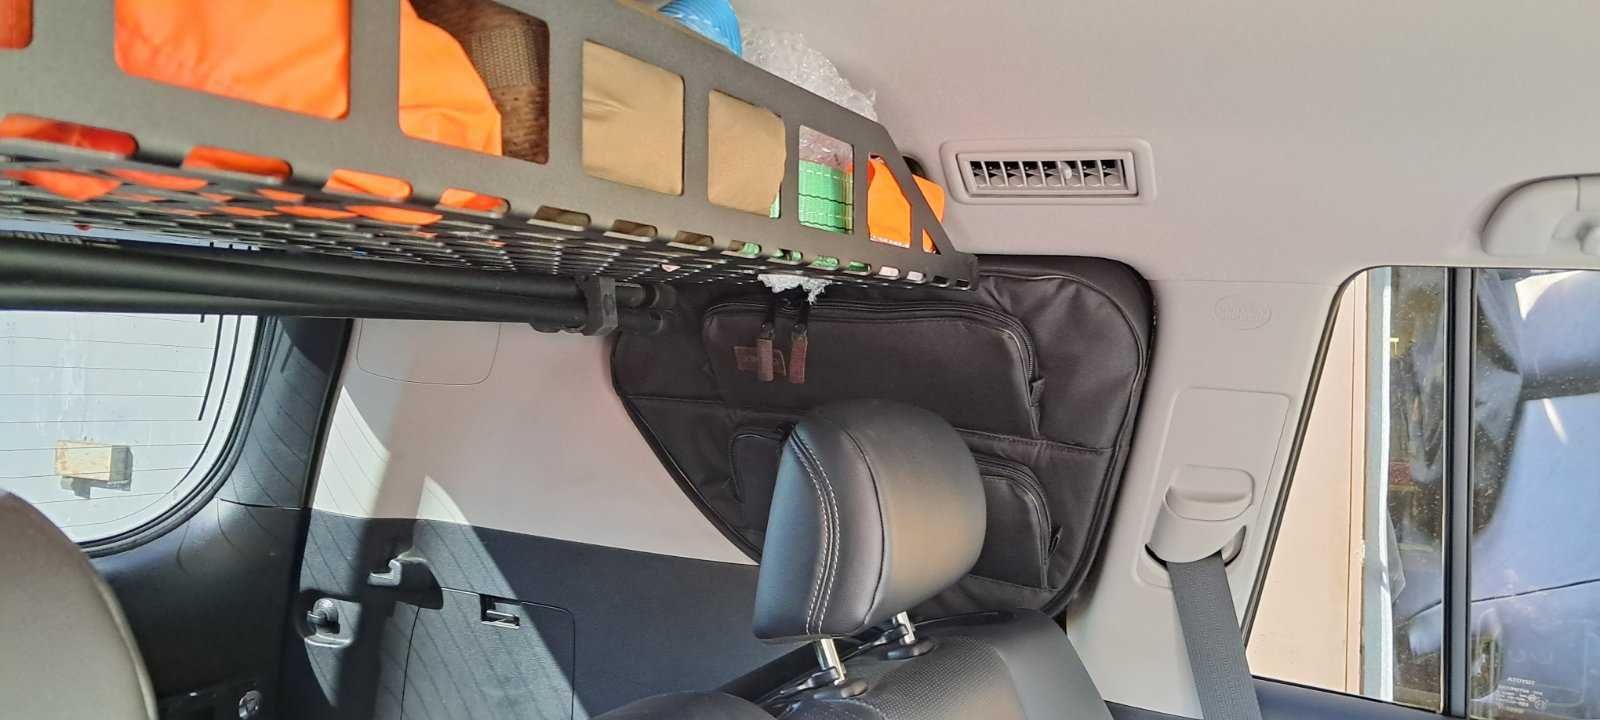 Термо сумка органайзер у вікно багажника Land Cruiser 300